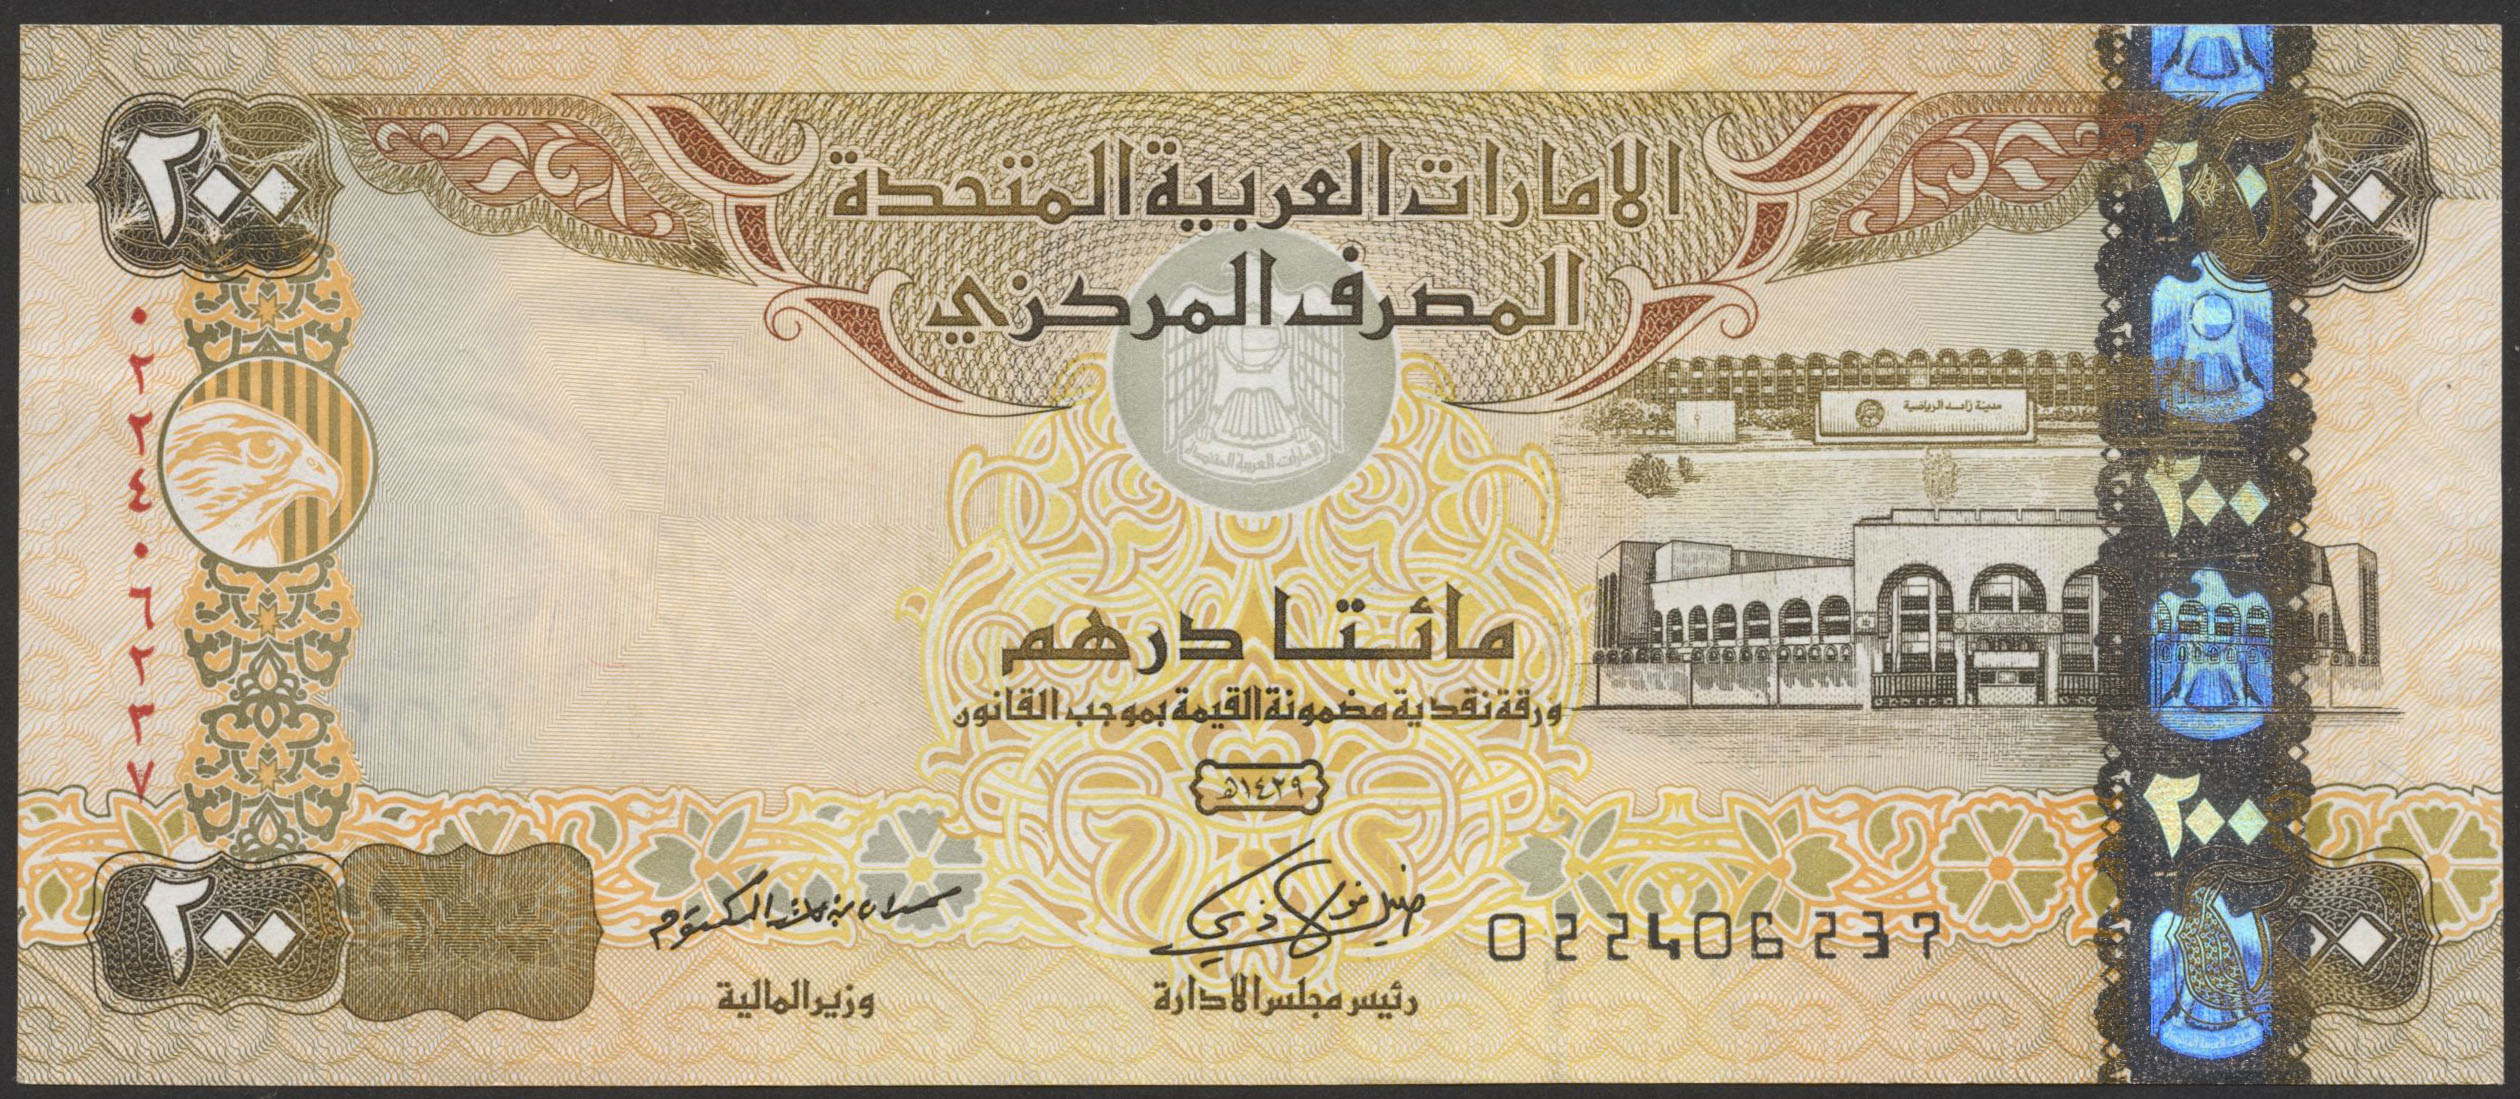 12000 дирхам. Банкнота арабские эмираты 200 дирхам. Купюры дирхамы ОАЭ. Банкнота 5 дирхамов ОАЭ. Банкноты United arab Emirates,2008, 50 dirhams.